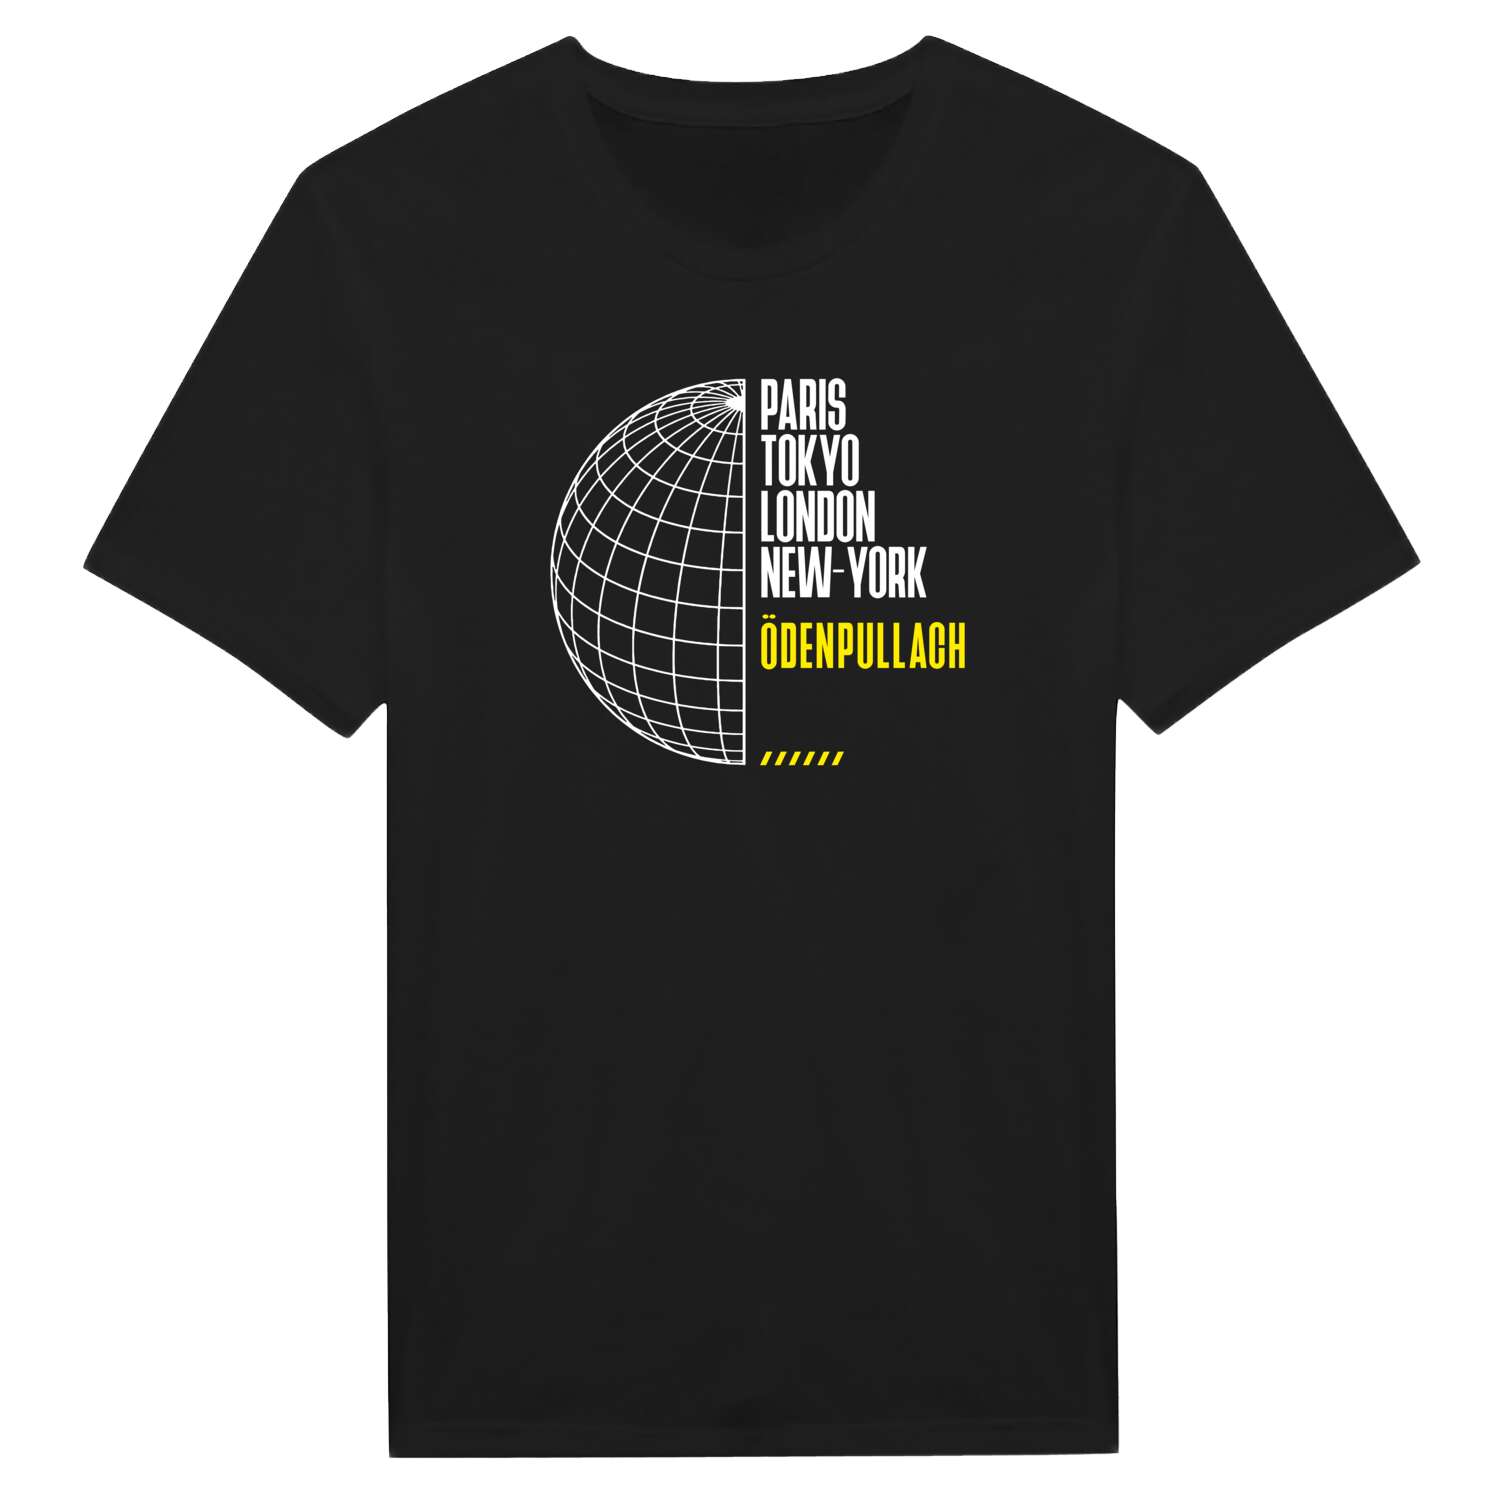 Ödenpullach T-Shirt »Paris Tokyo London«